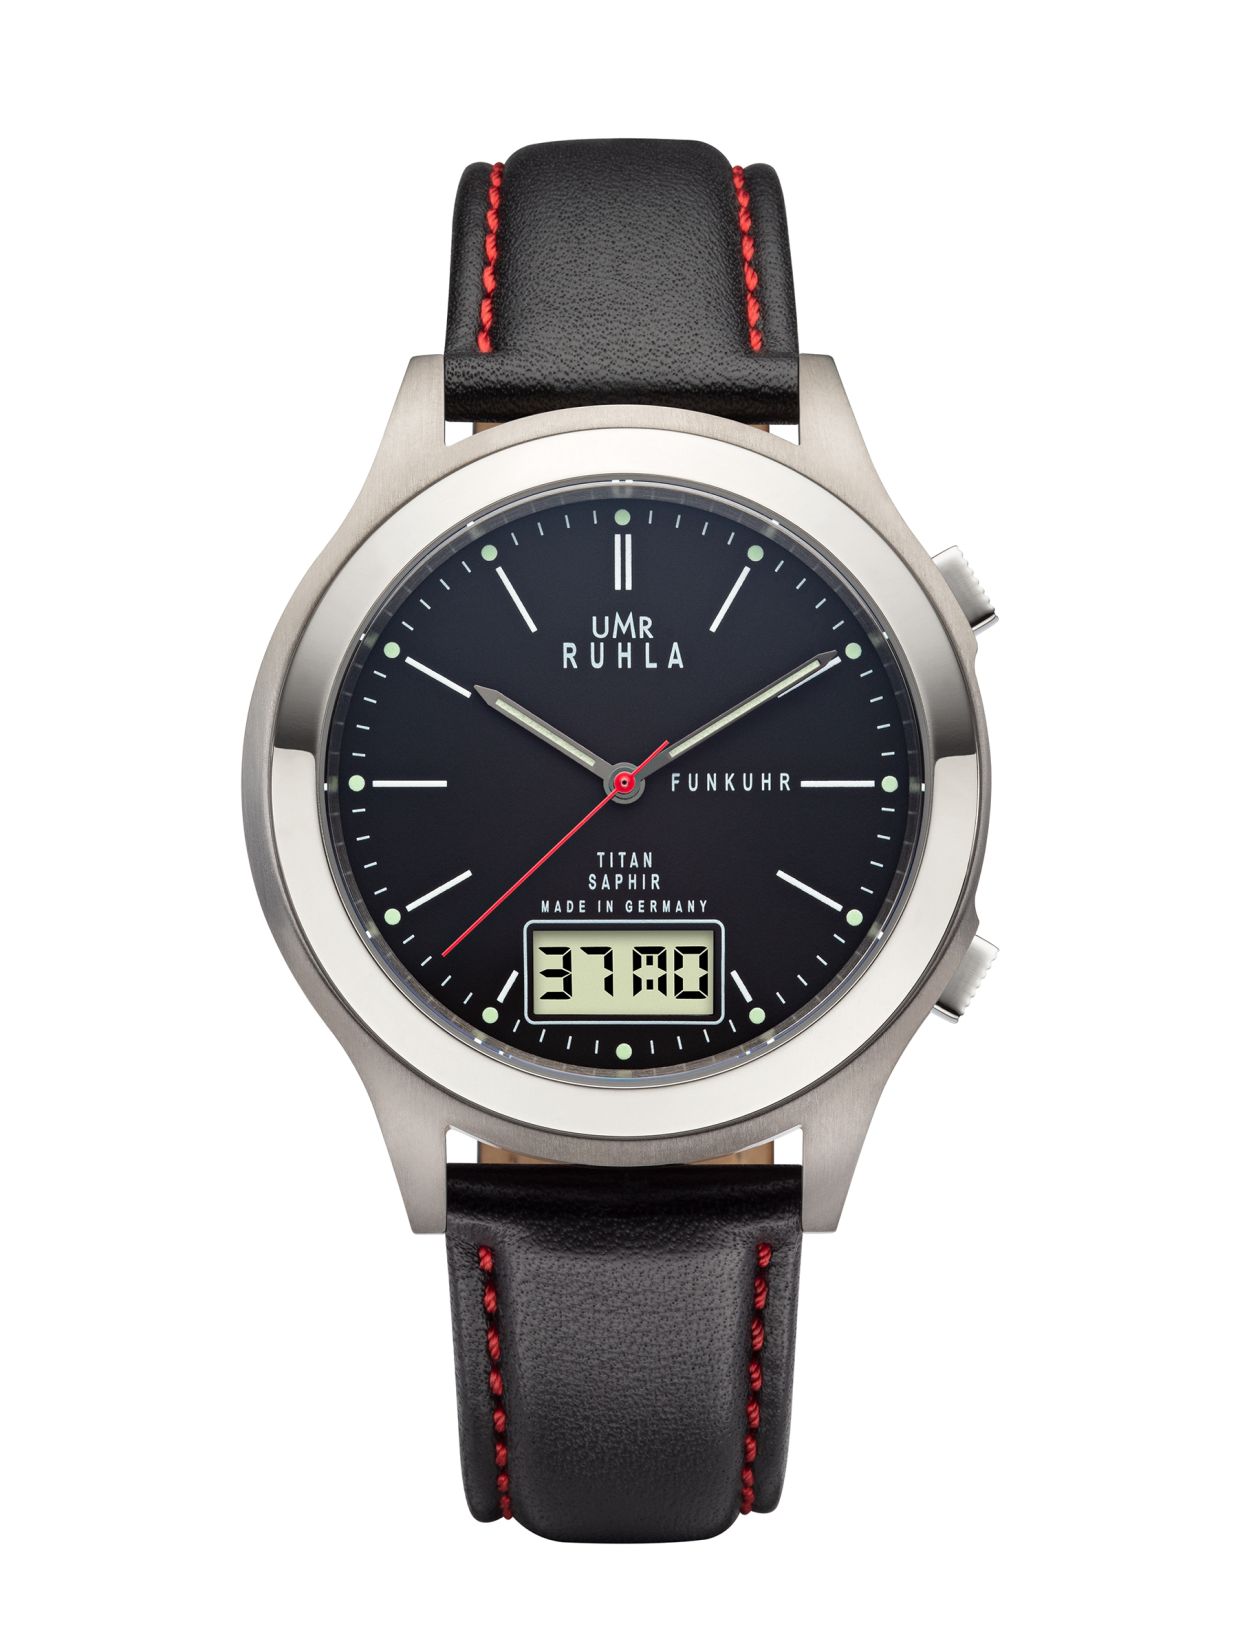 Uhren Manufaktur Ruhla - radio controlled wristwatch - black - leather strap - made in Germany